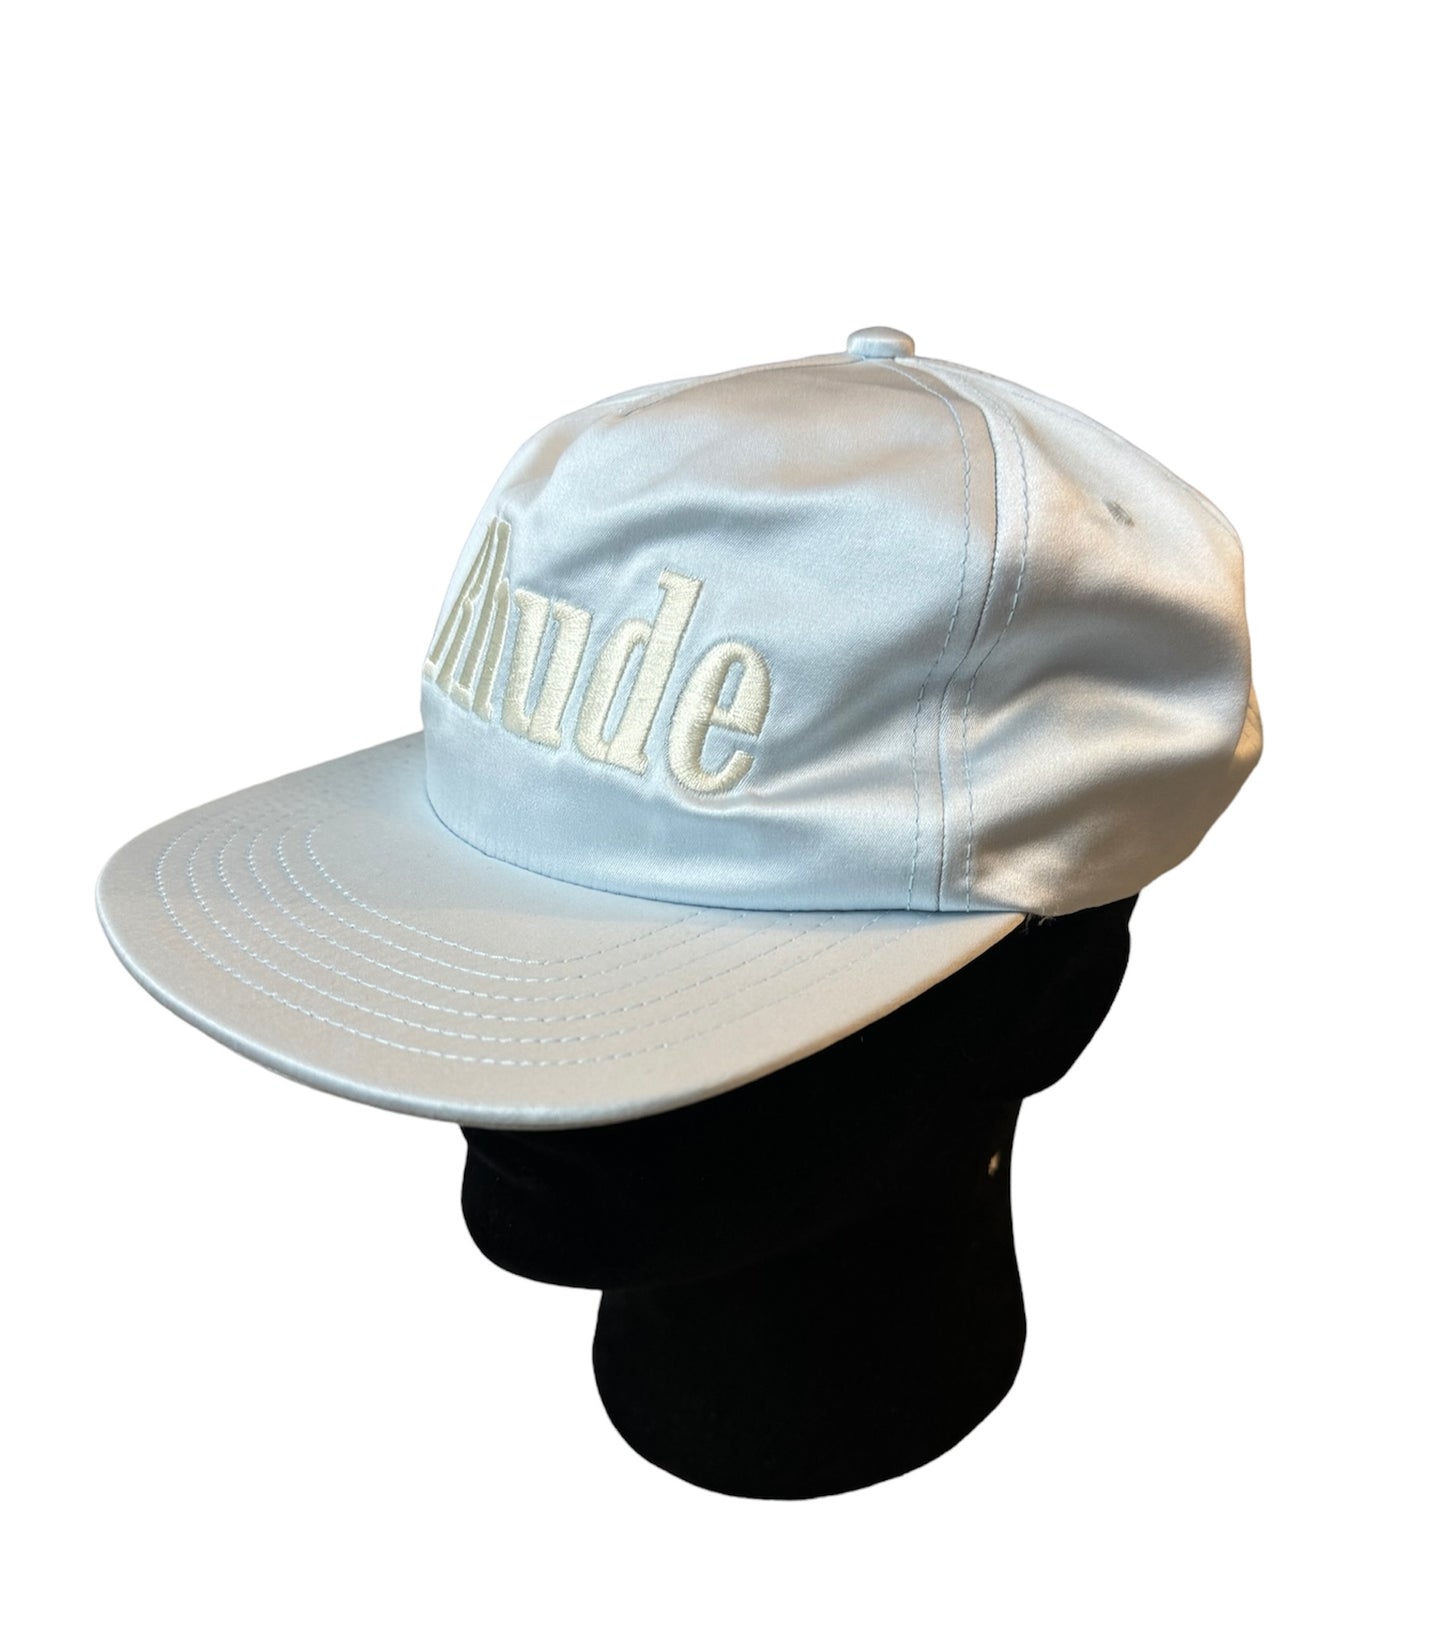 RHUDE SATIN LOGO BASEBALL CAP - SKY BLUE